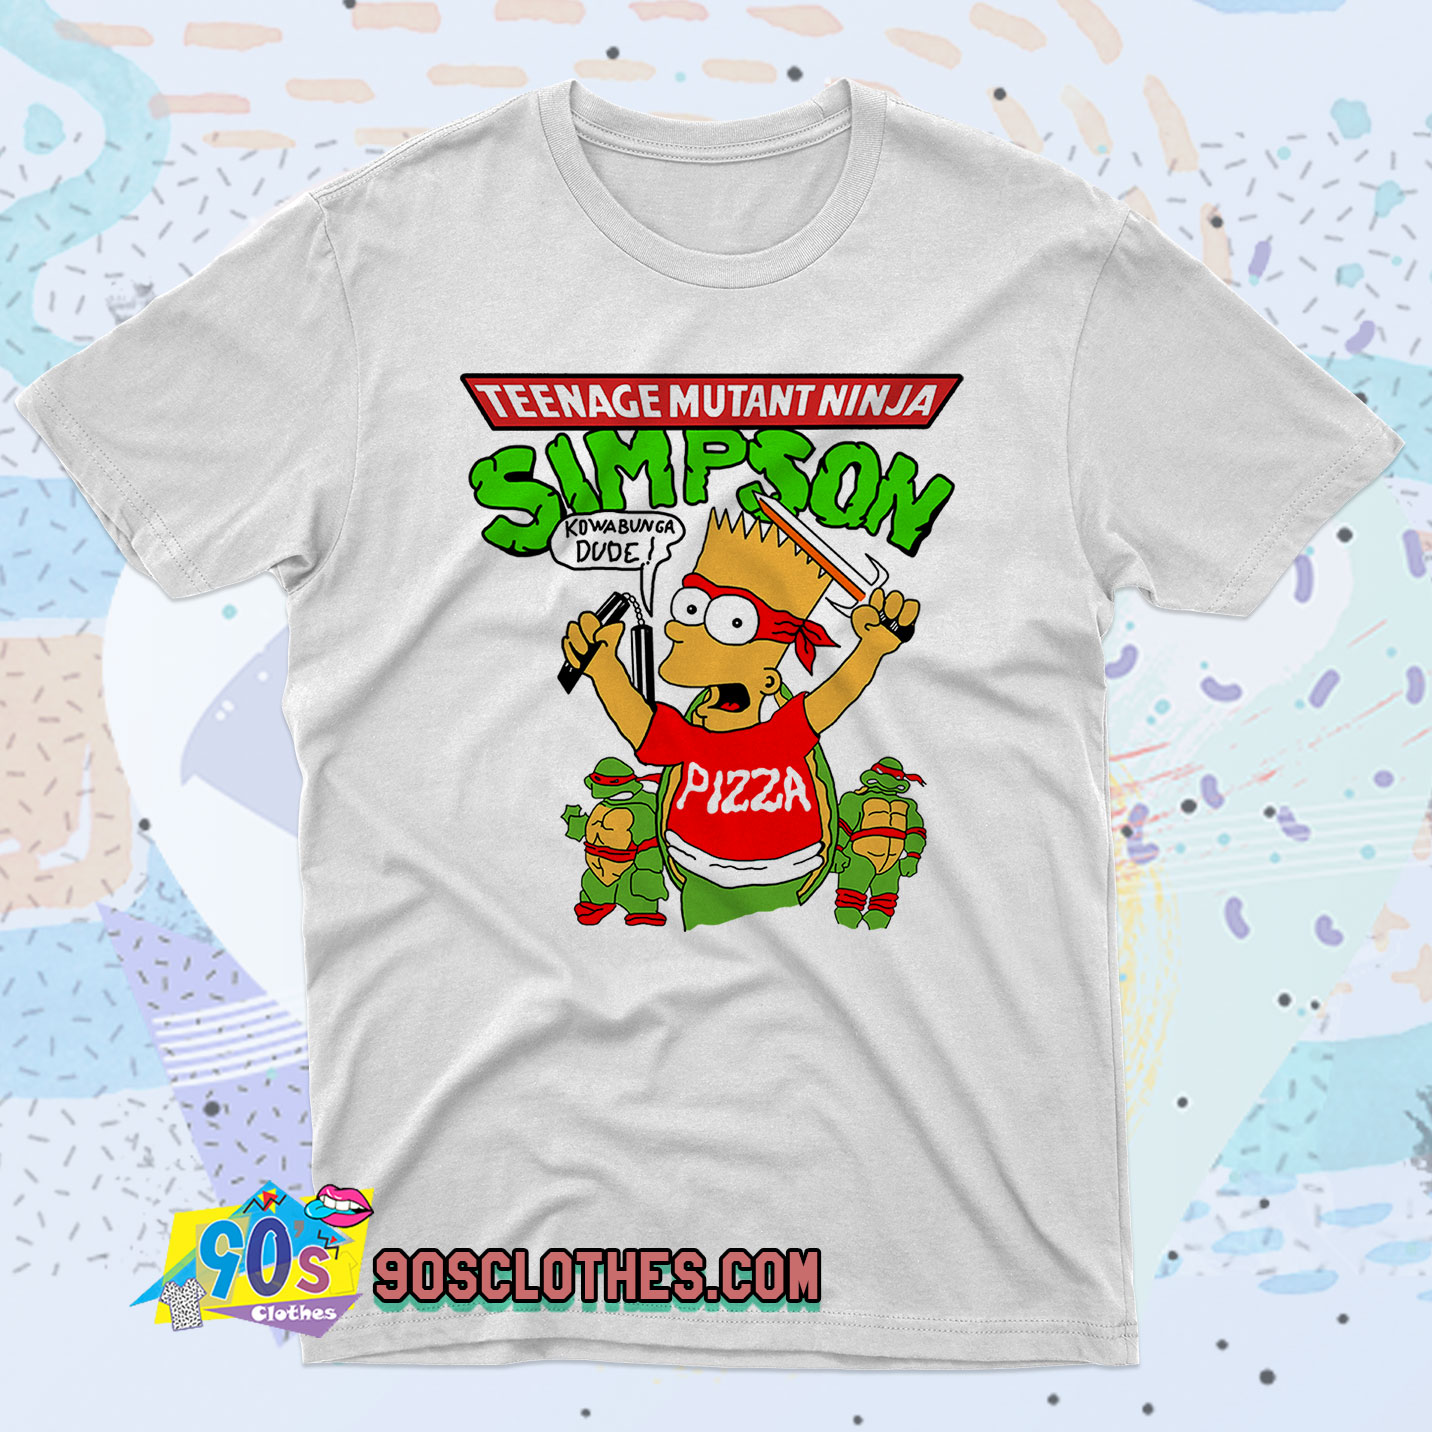 Vintage 90s TMNT Bart Simpson Ninja Turtles Youth Graphic T-Shirt Size S/M Rare